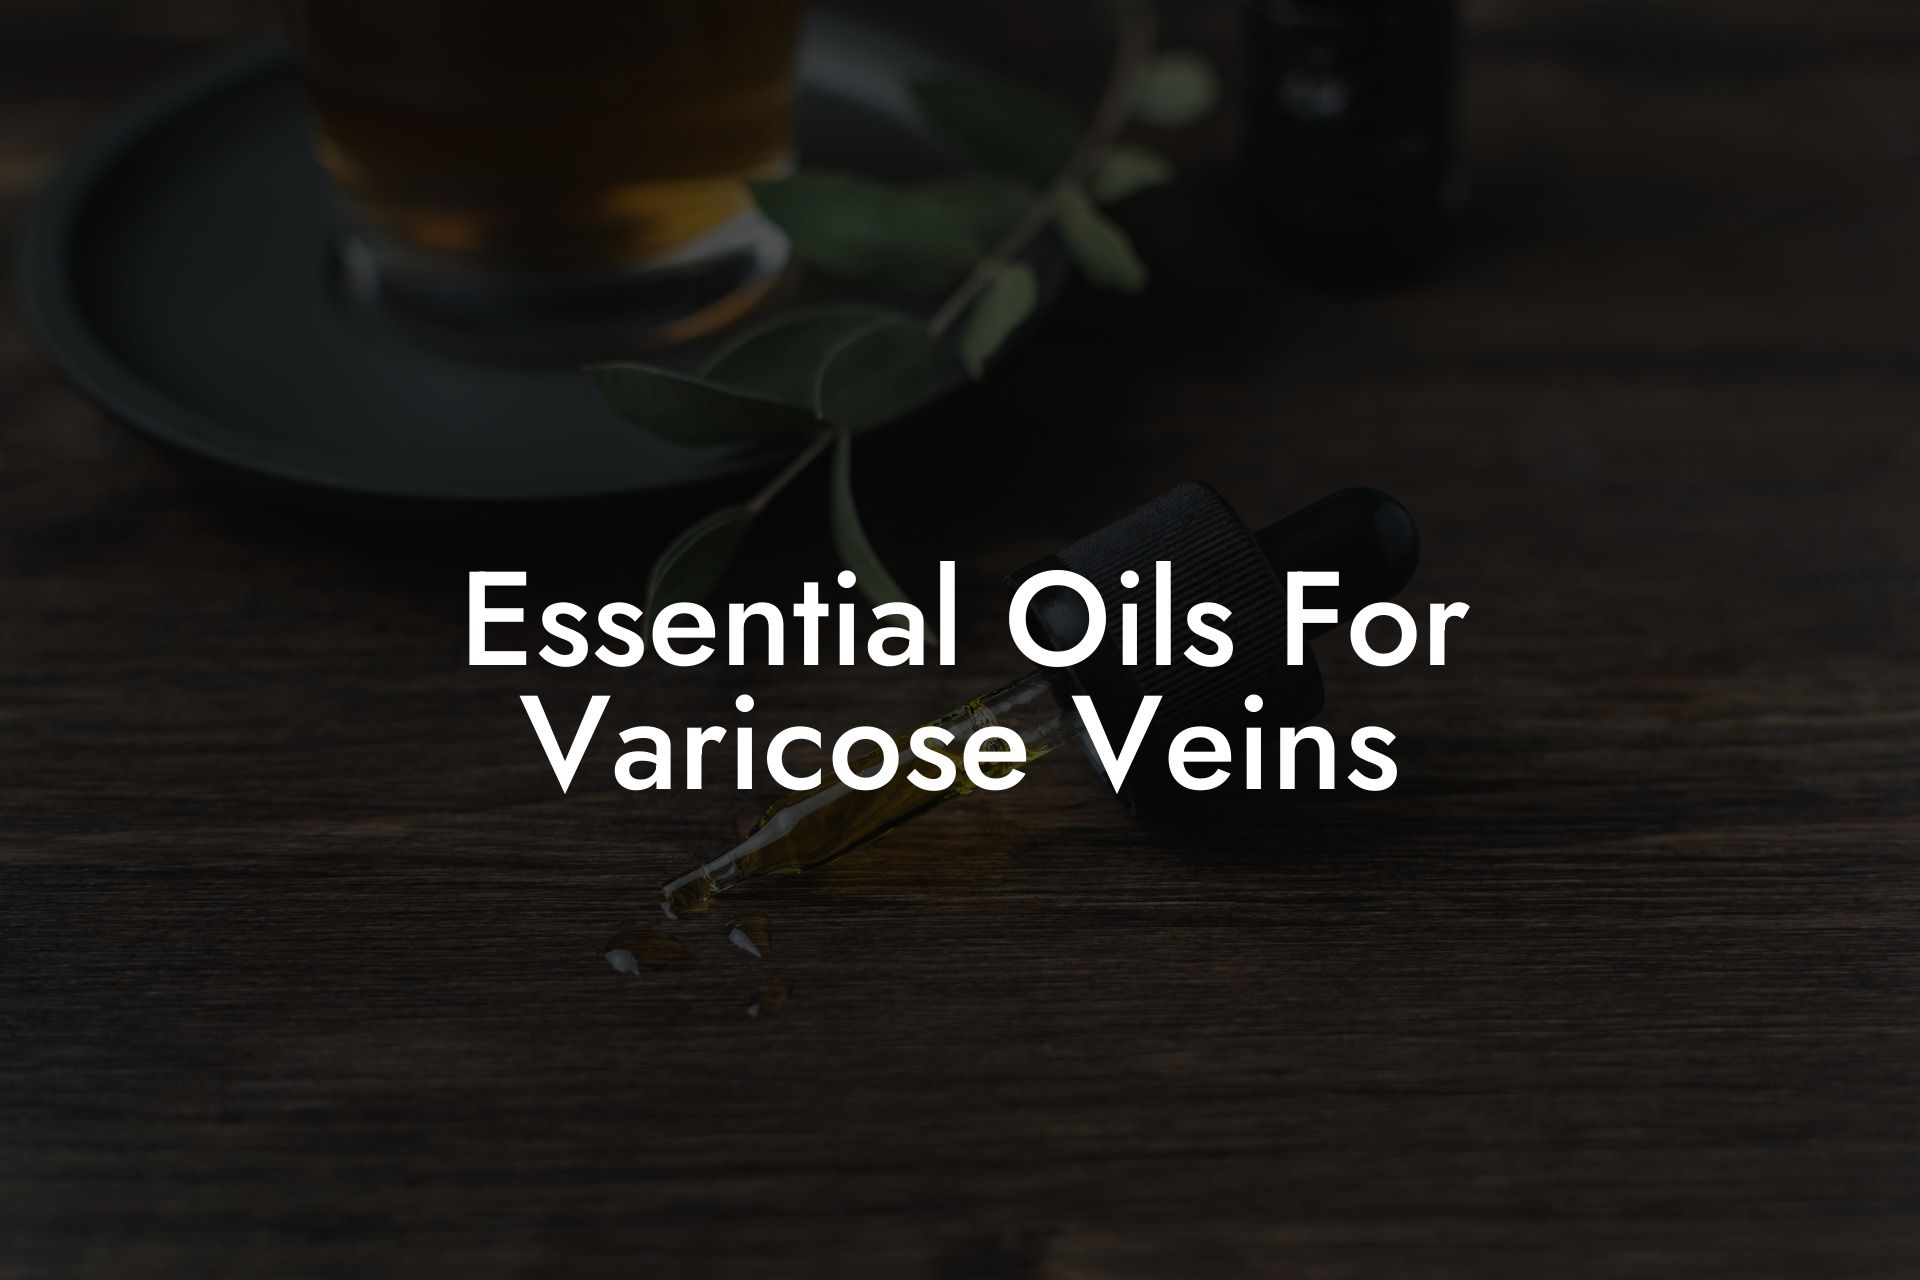 Essential Oils For Varicose Veins